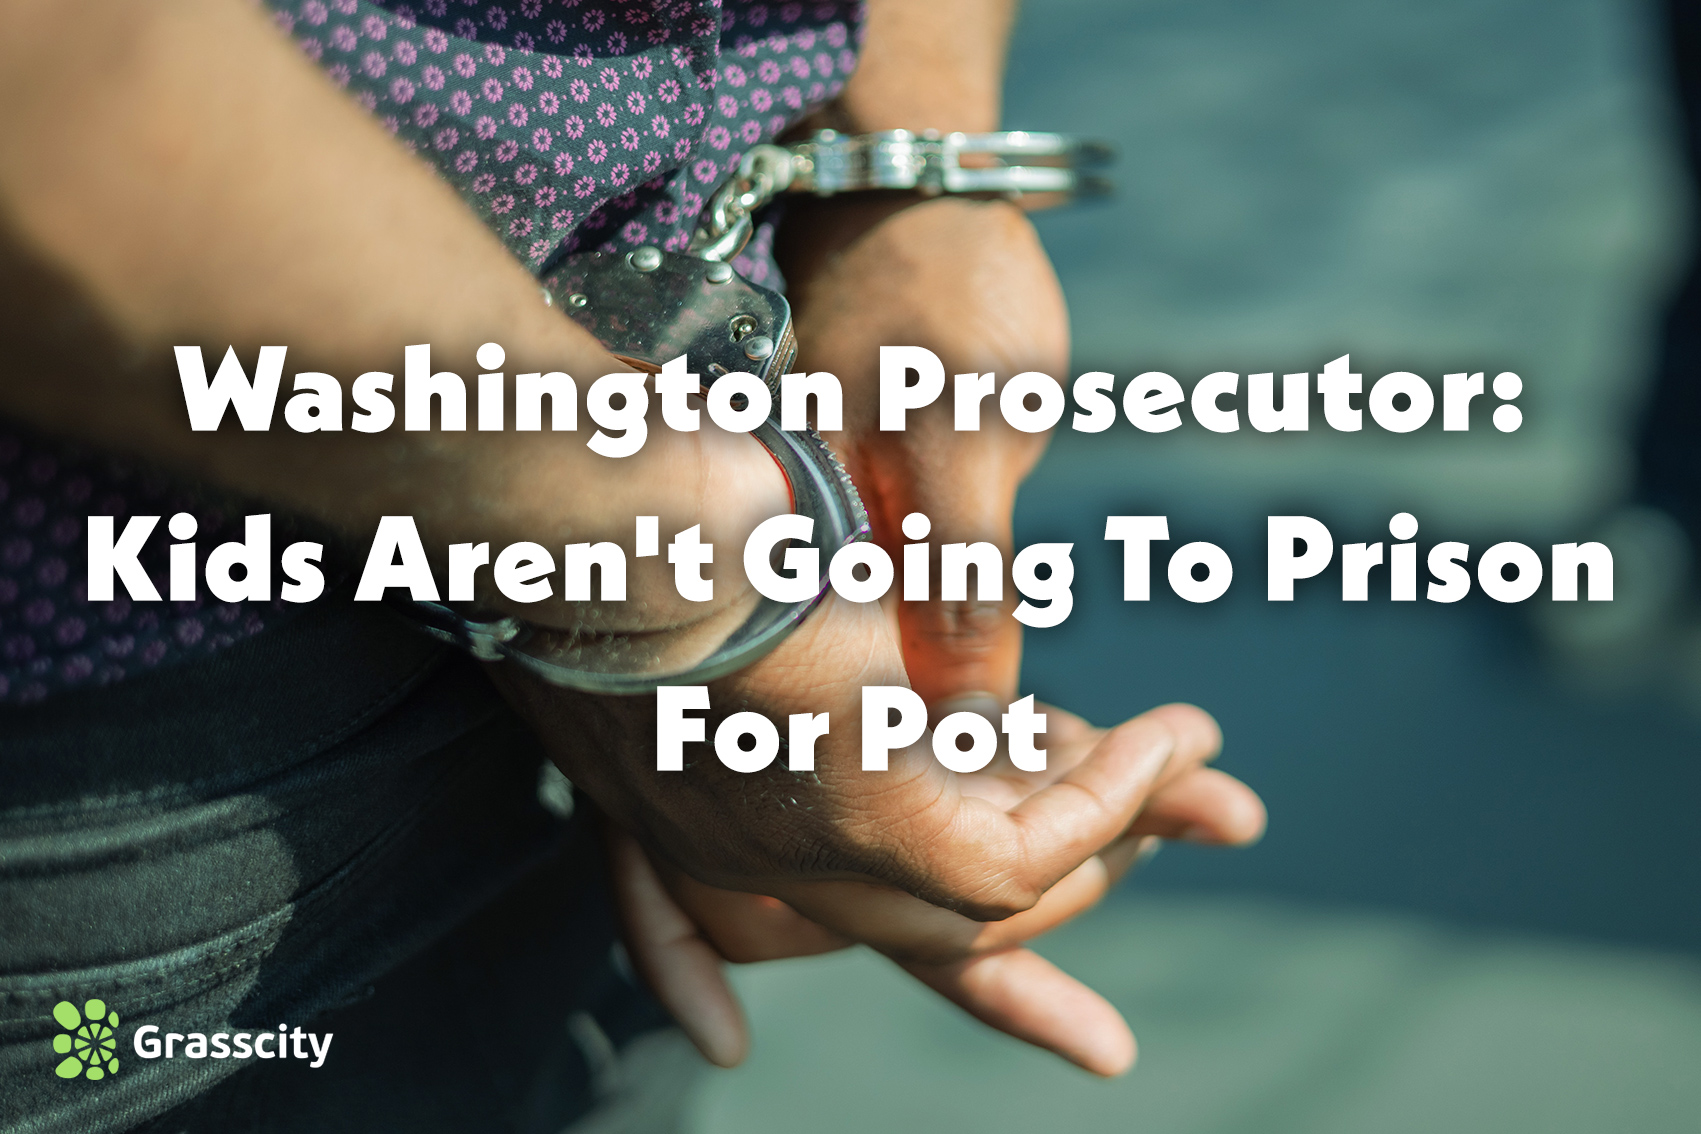 Washington Prosecutor: Kids Aren't Going To Prison For Pot